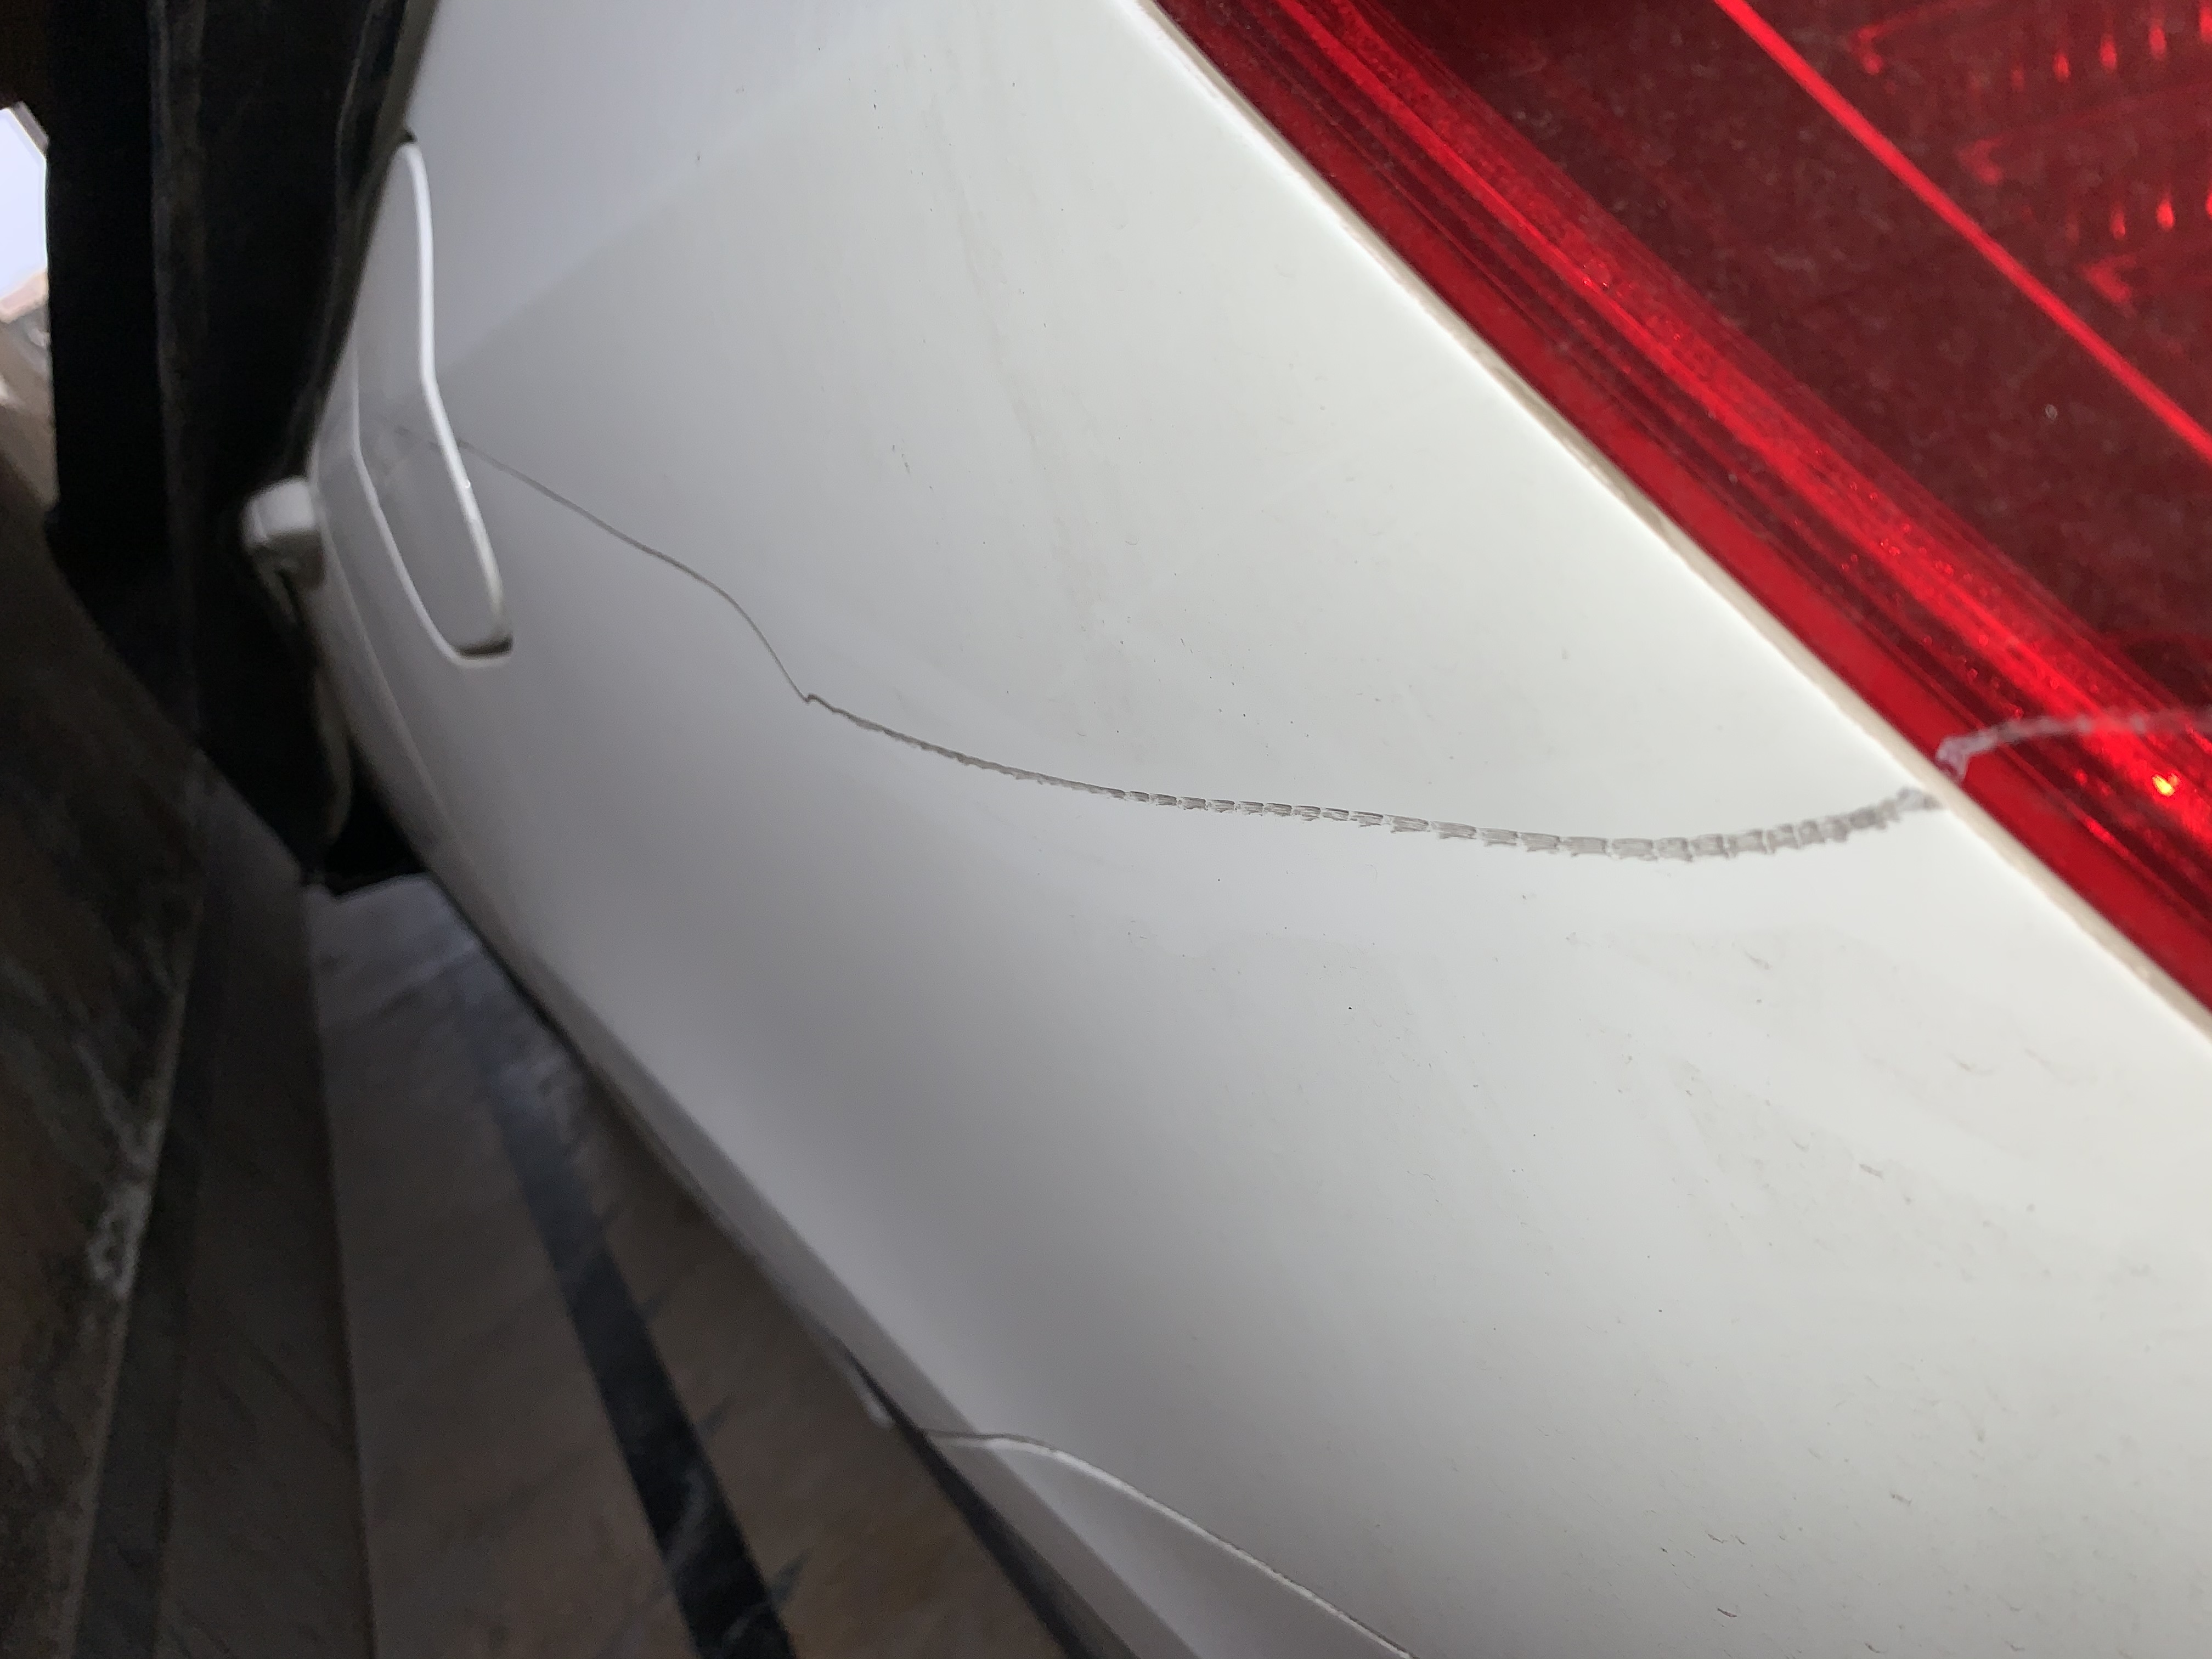 How Deep is My Car Scratch?